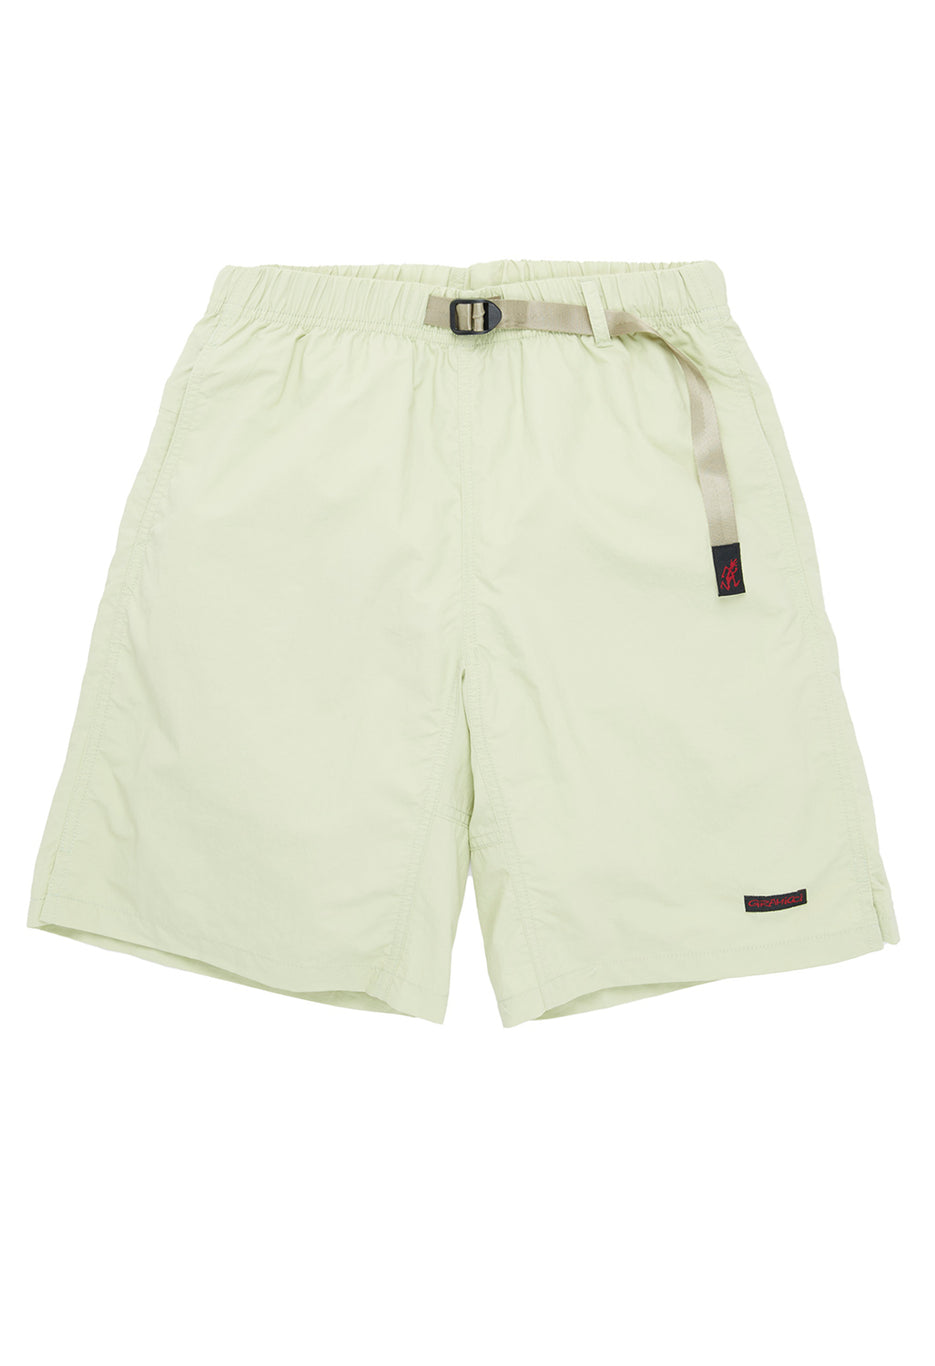 Gramicci Men's Nylon Packable G Shorts - Lime